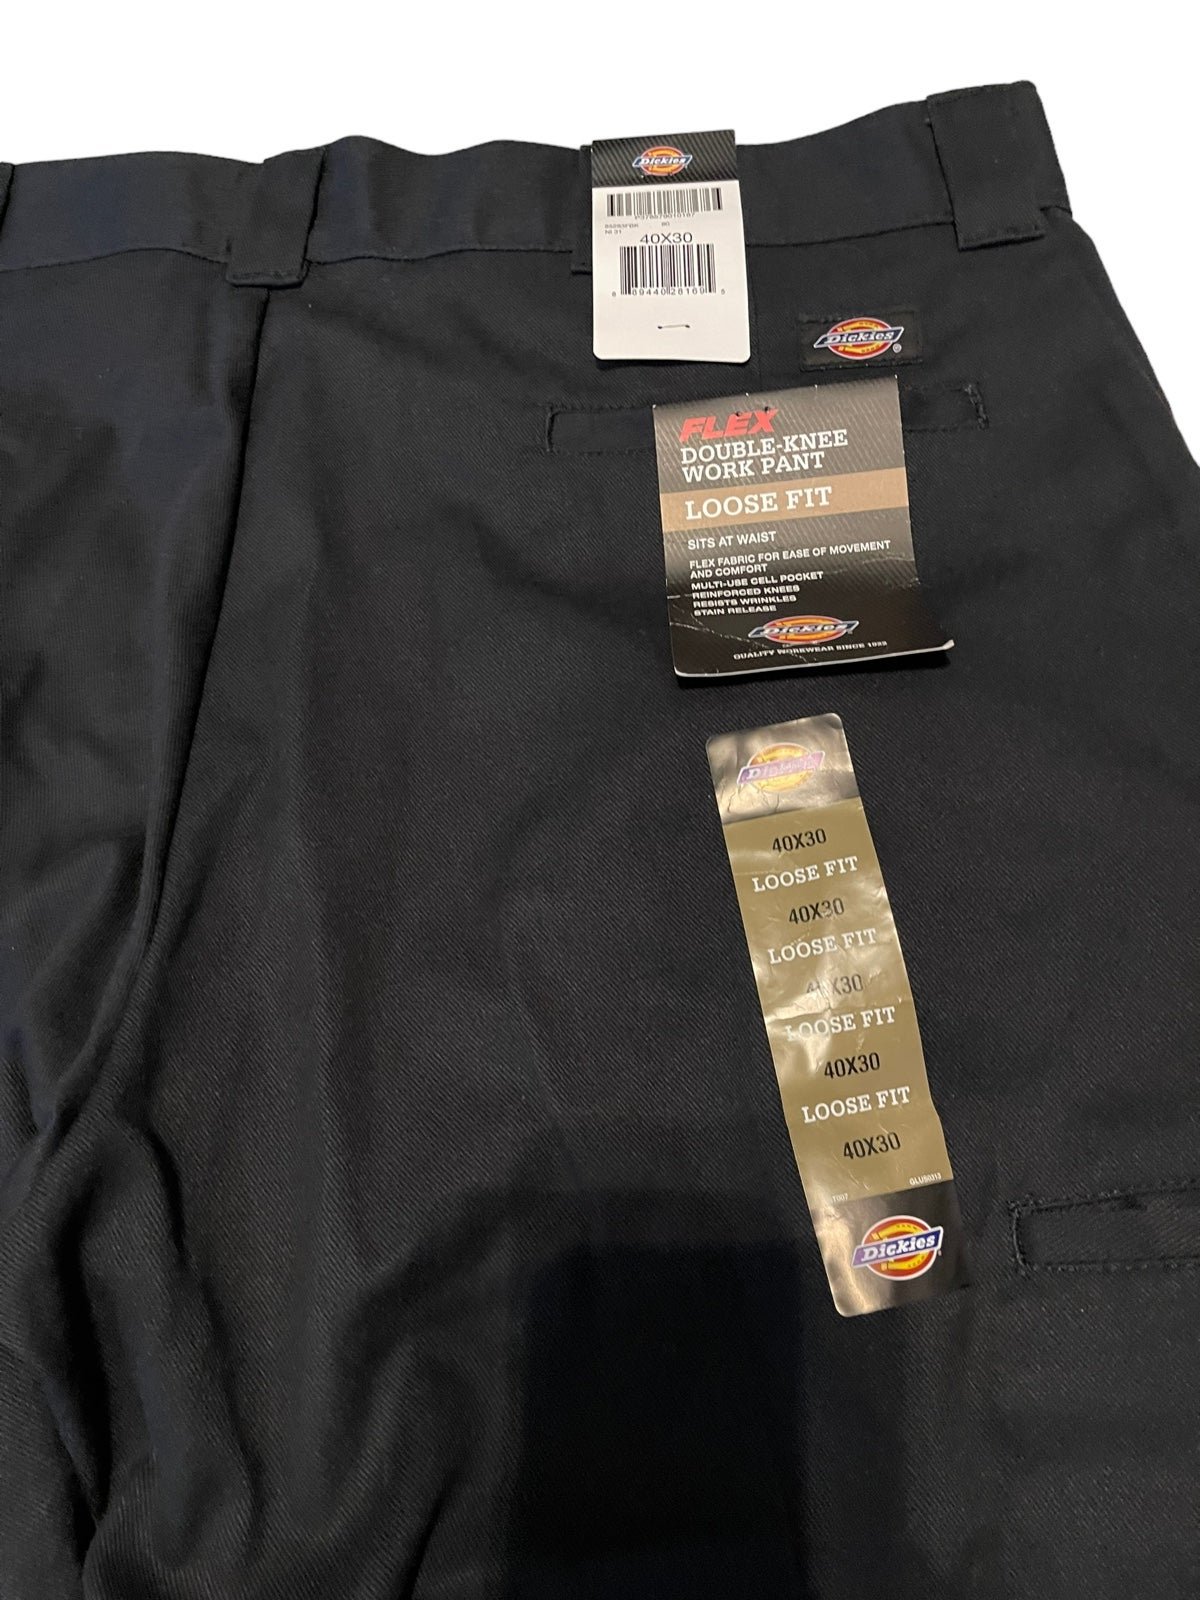 good price Men’s pants size 40x30 dickies GYWmIsdjI best sale